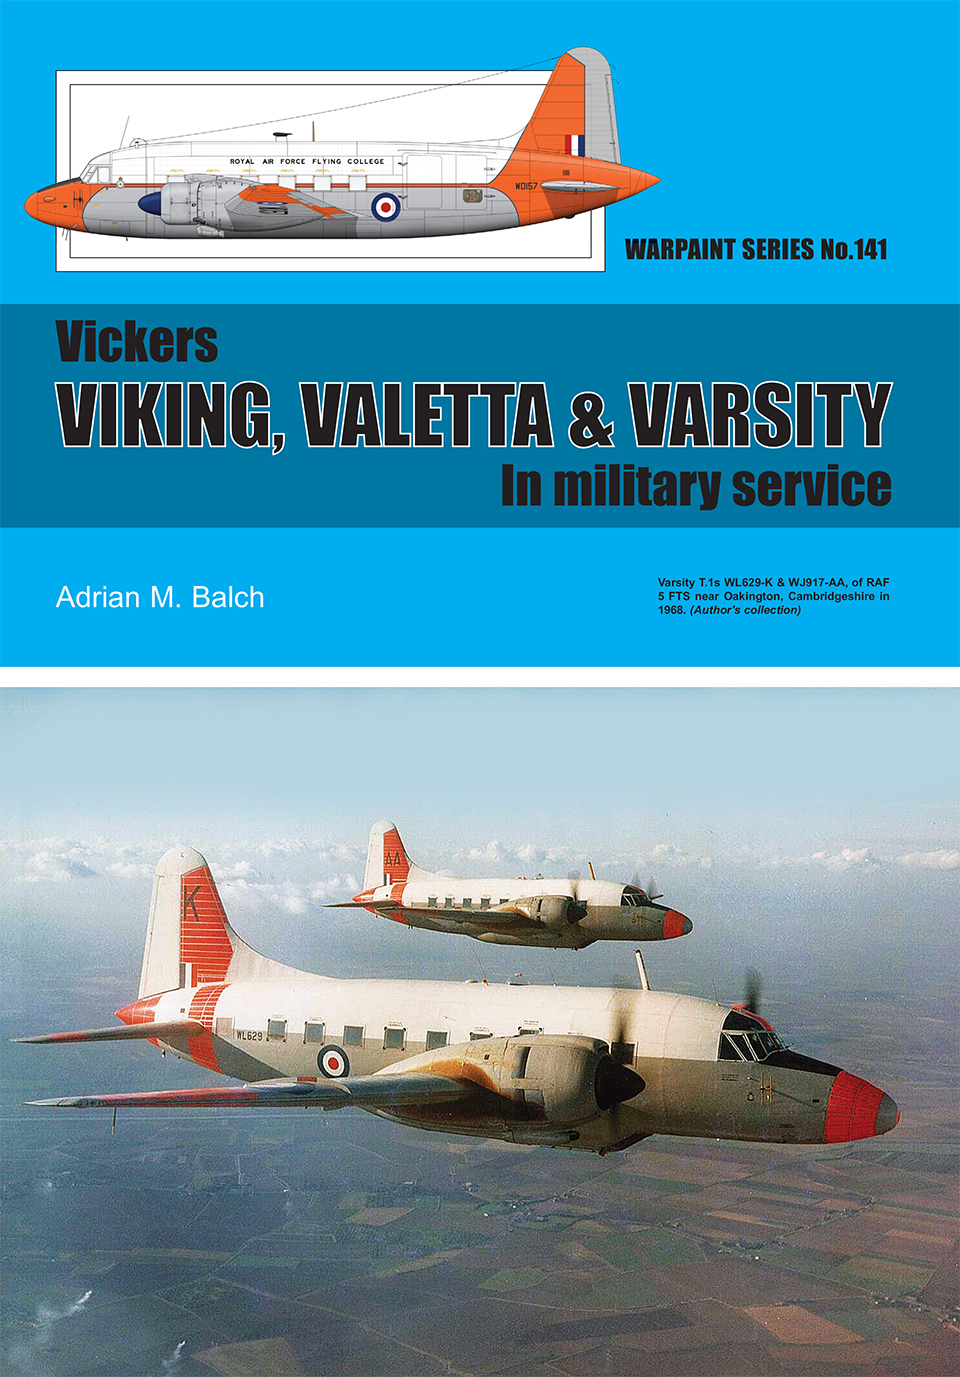 Guideline Publications Ltd Warpaint 141 Vickers Viking- Valetta & Varsity By Adrian m Bach 